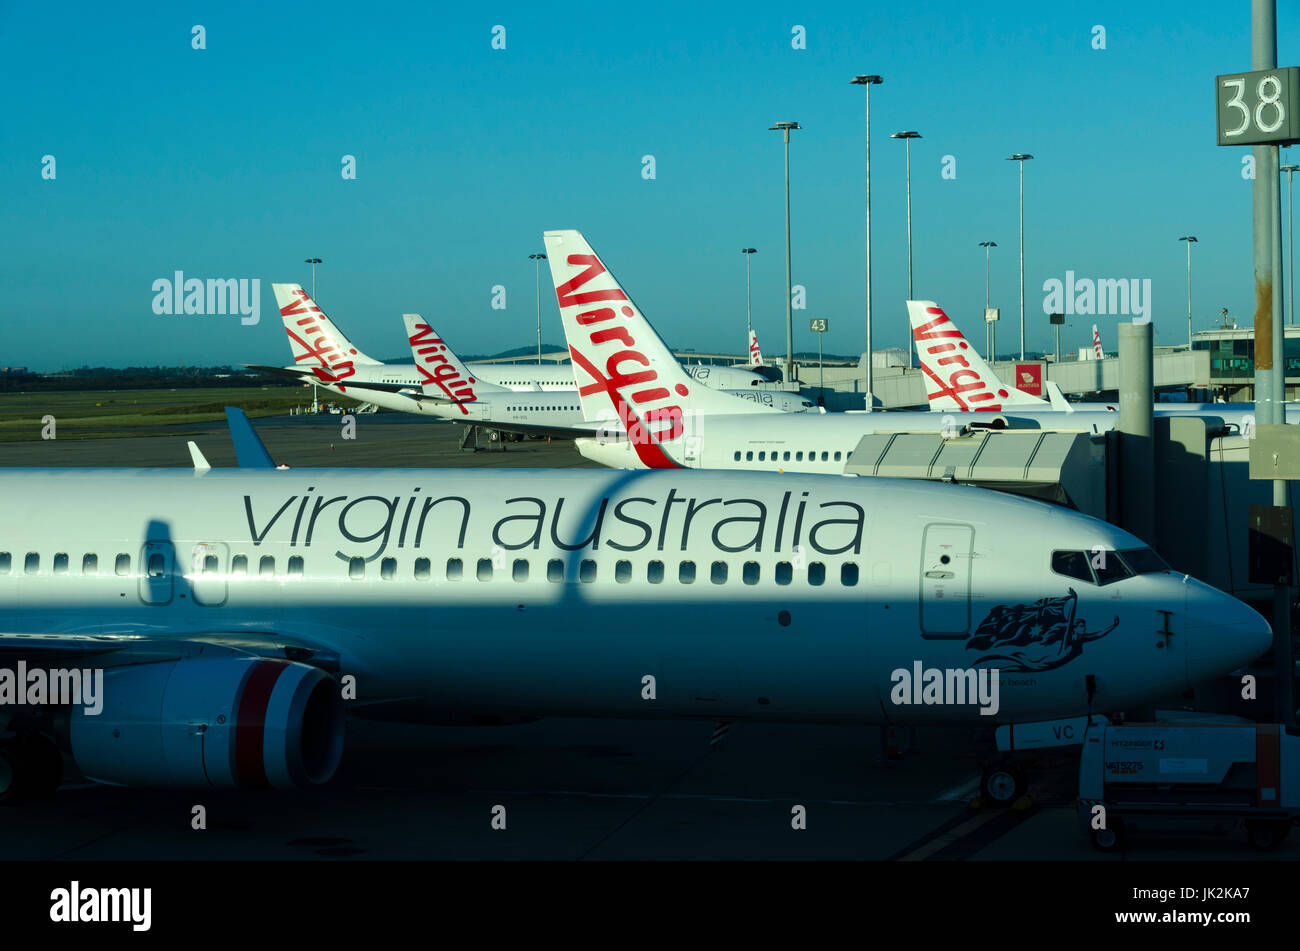 Virgin Australia aircraft at Brisbane Airport, Queensland, Australia Stock Photo